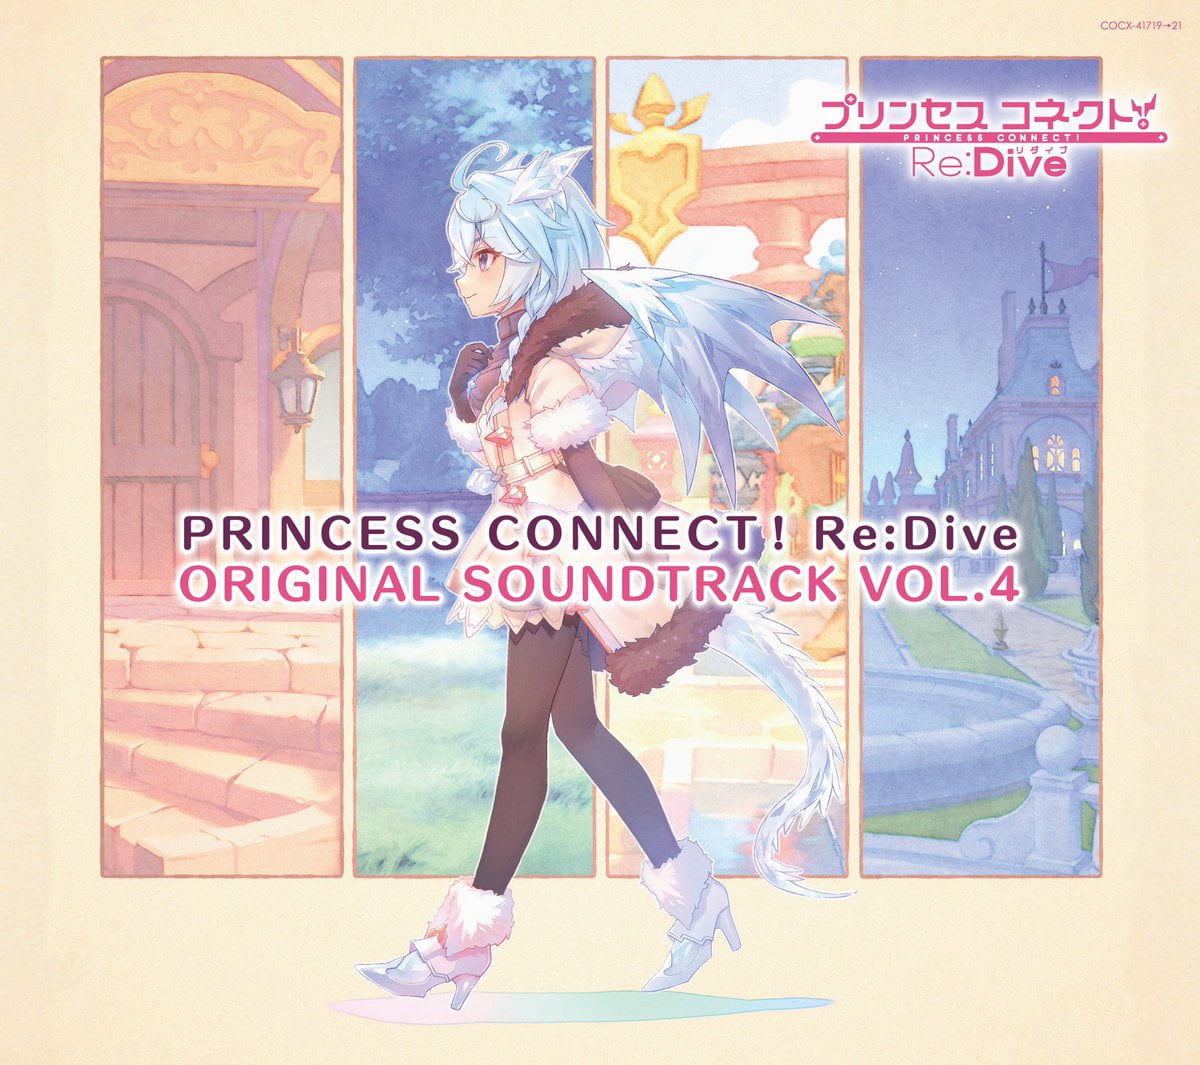 PRINCESS CONNECT! Re:Dive ORIGINAL SOUNDTRACK VOL.4